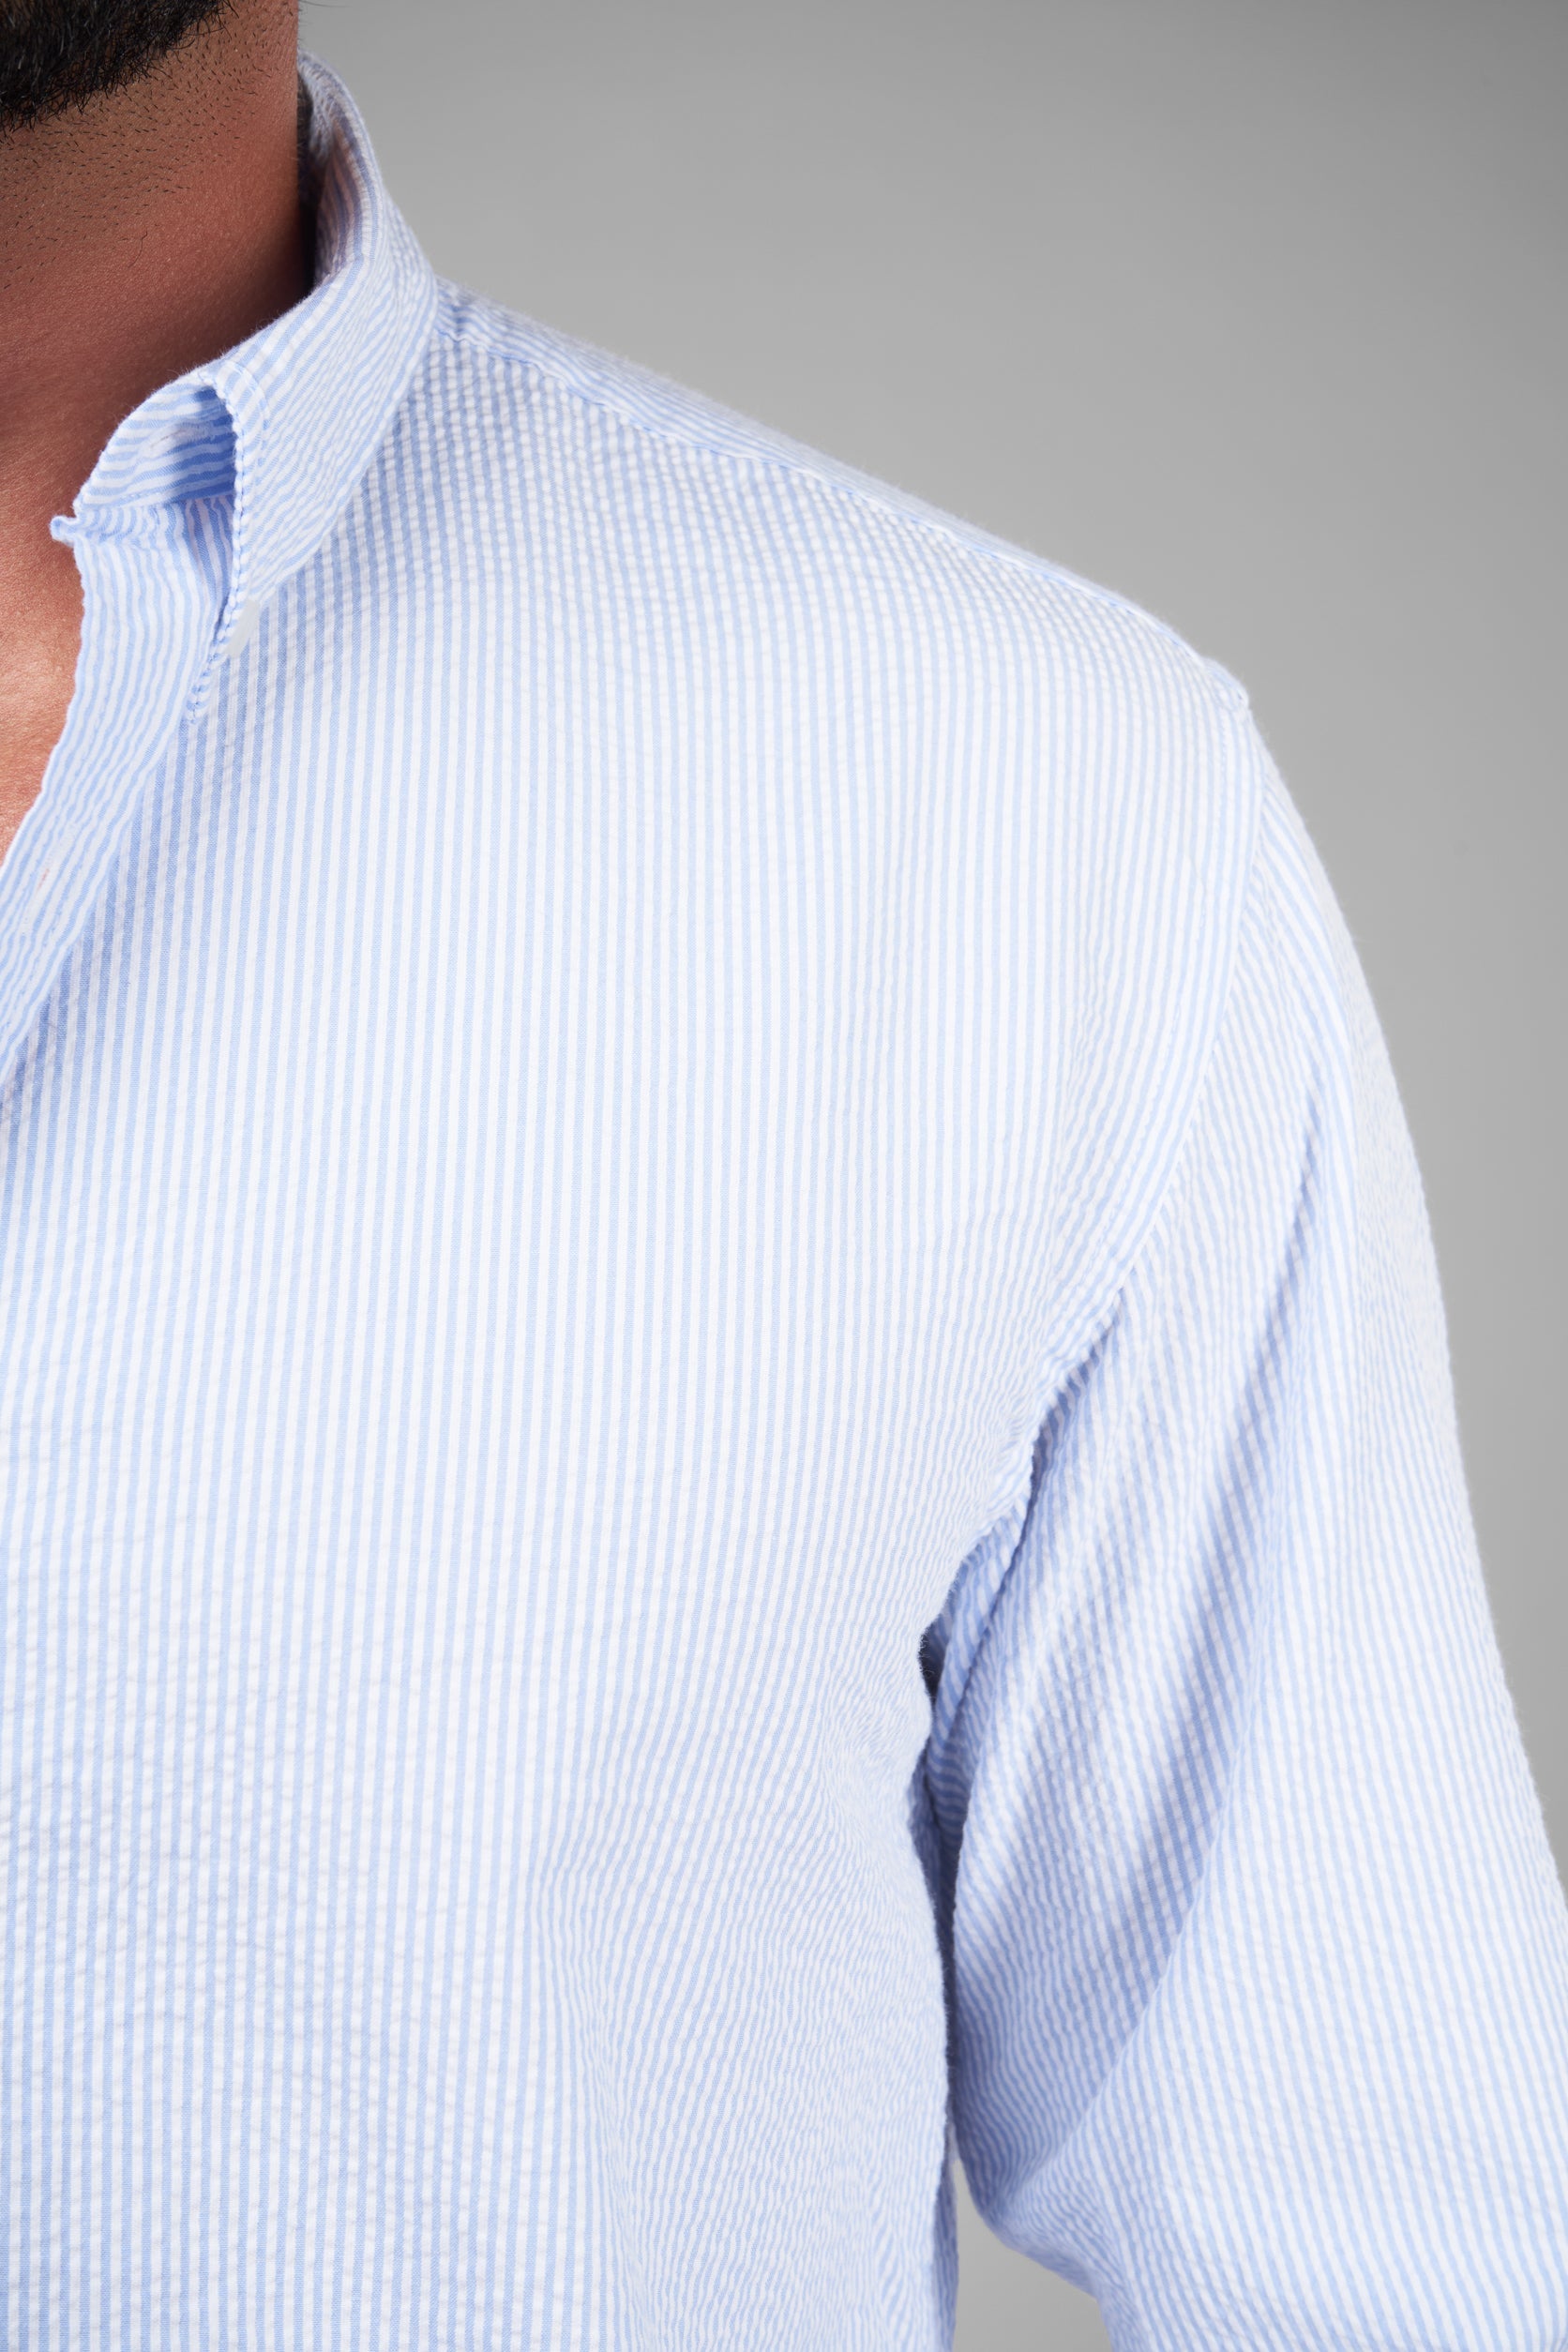 Striped Light Blue Long Sleeve Shirt(629-630)